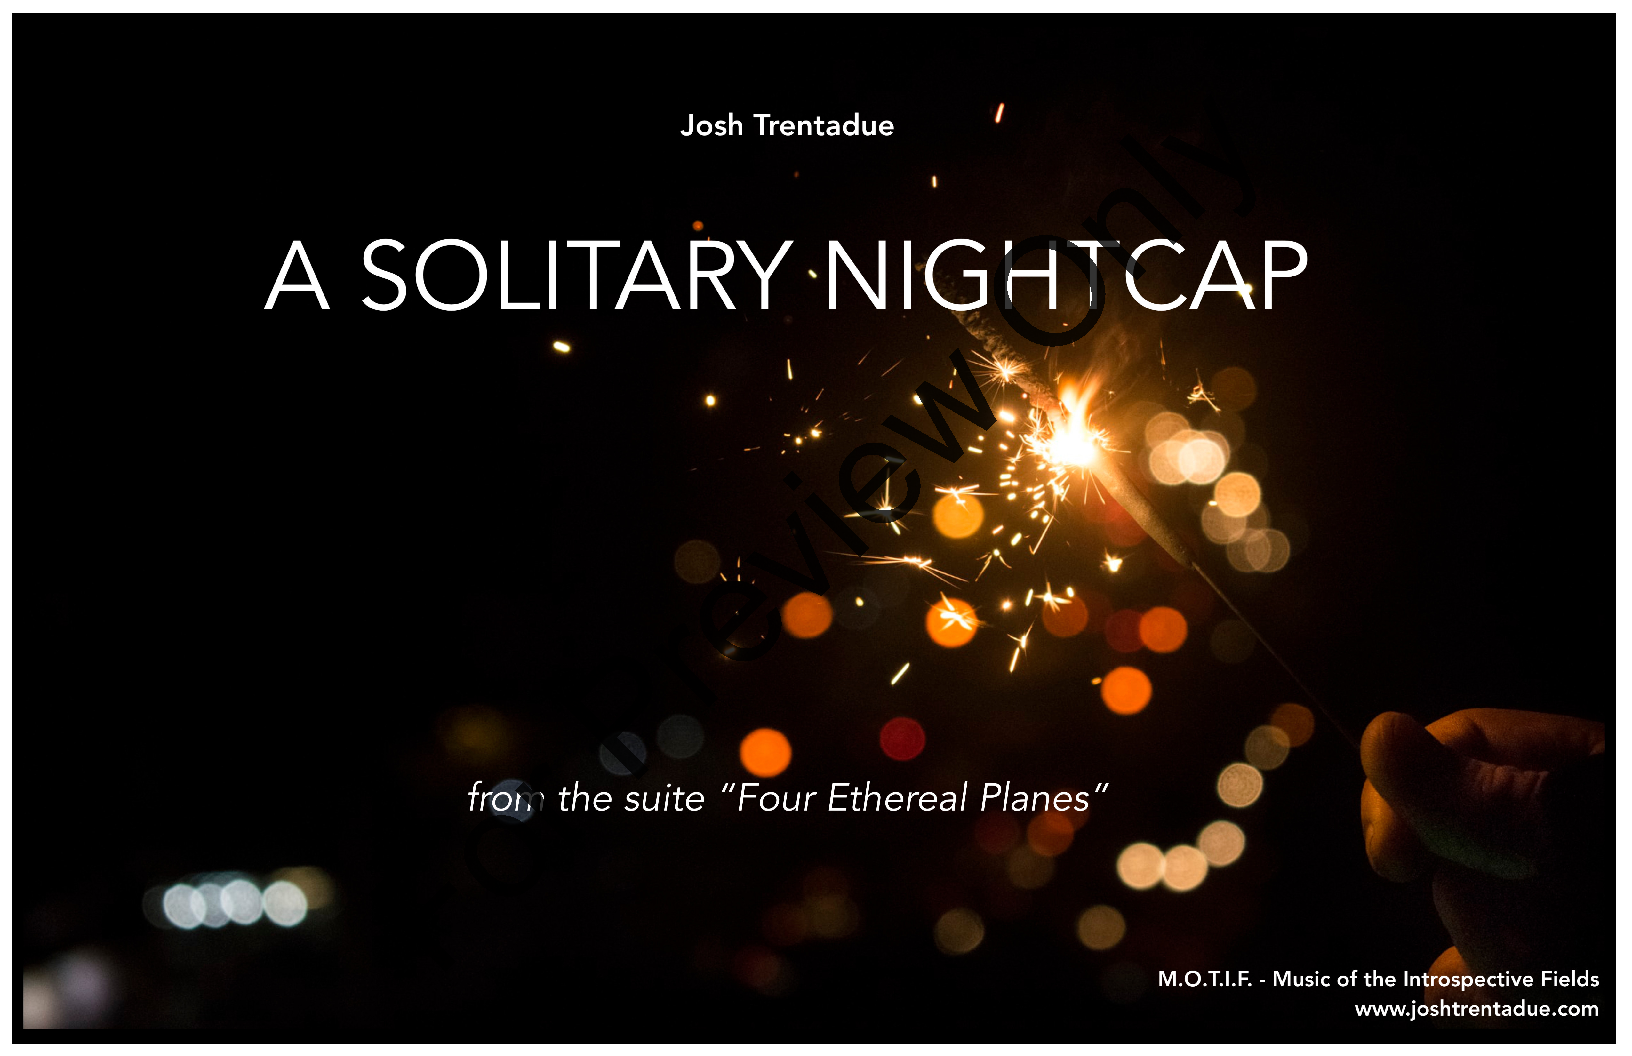 A Solitary Nightcap P.O.D.